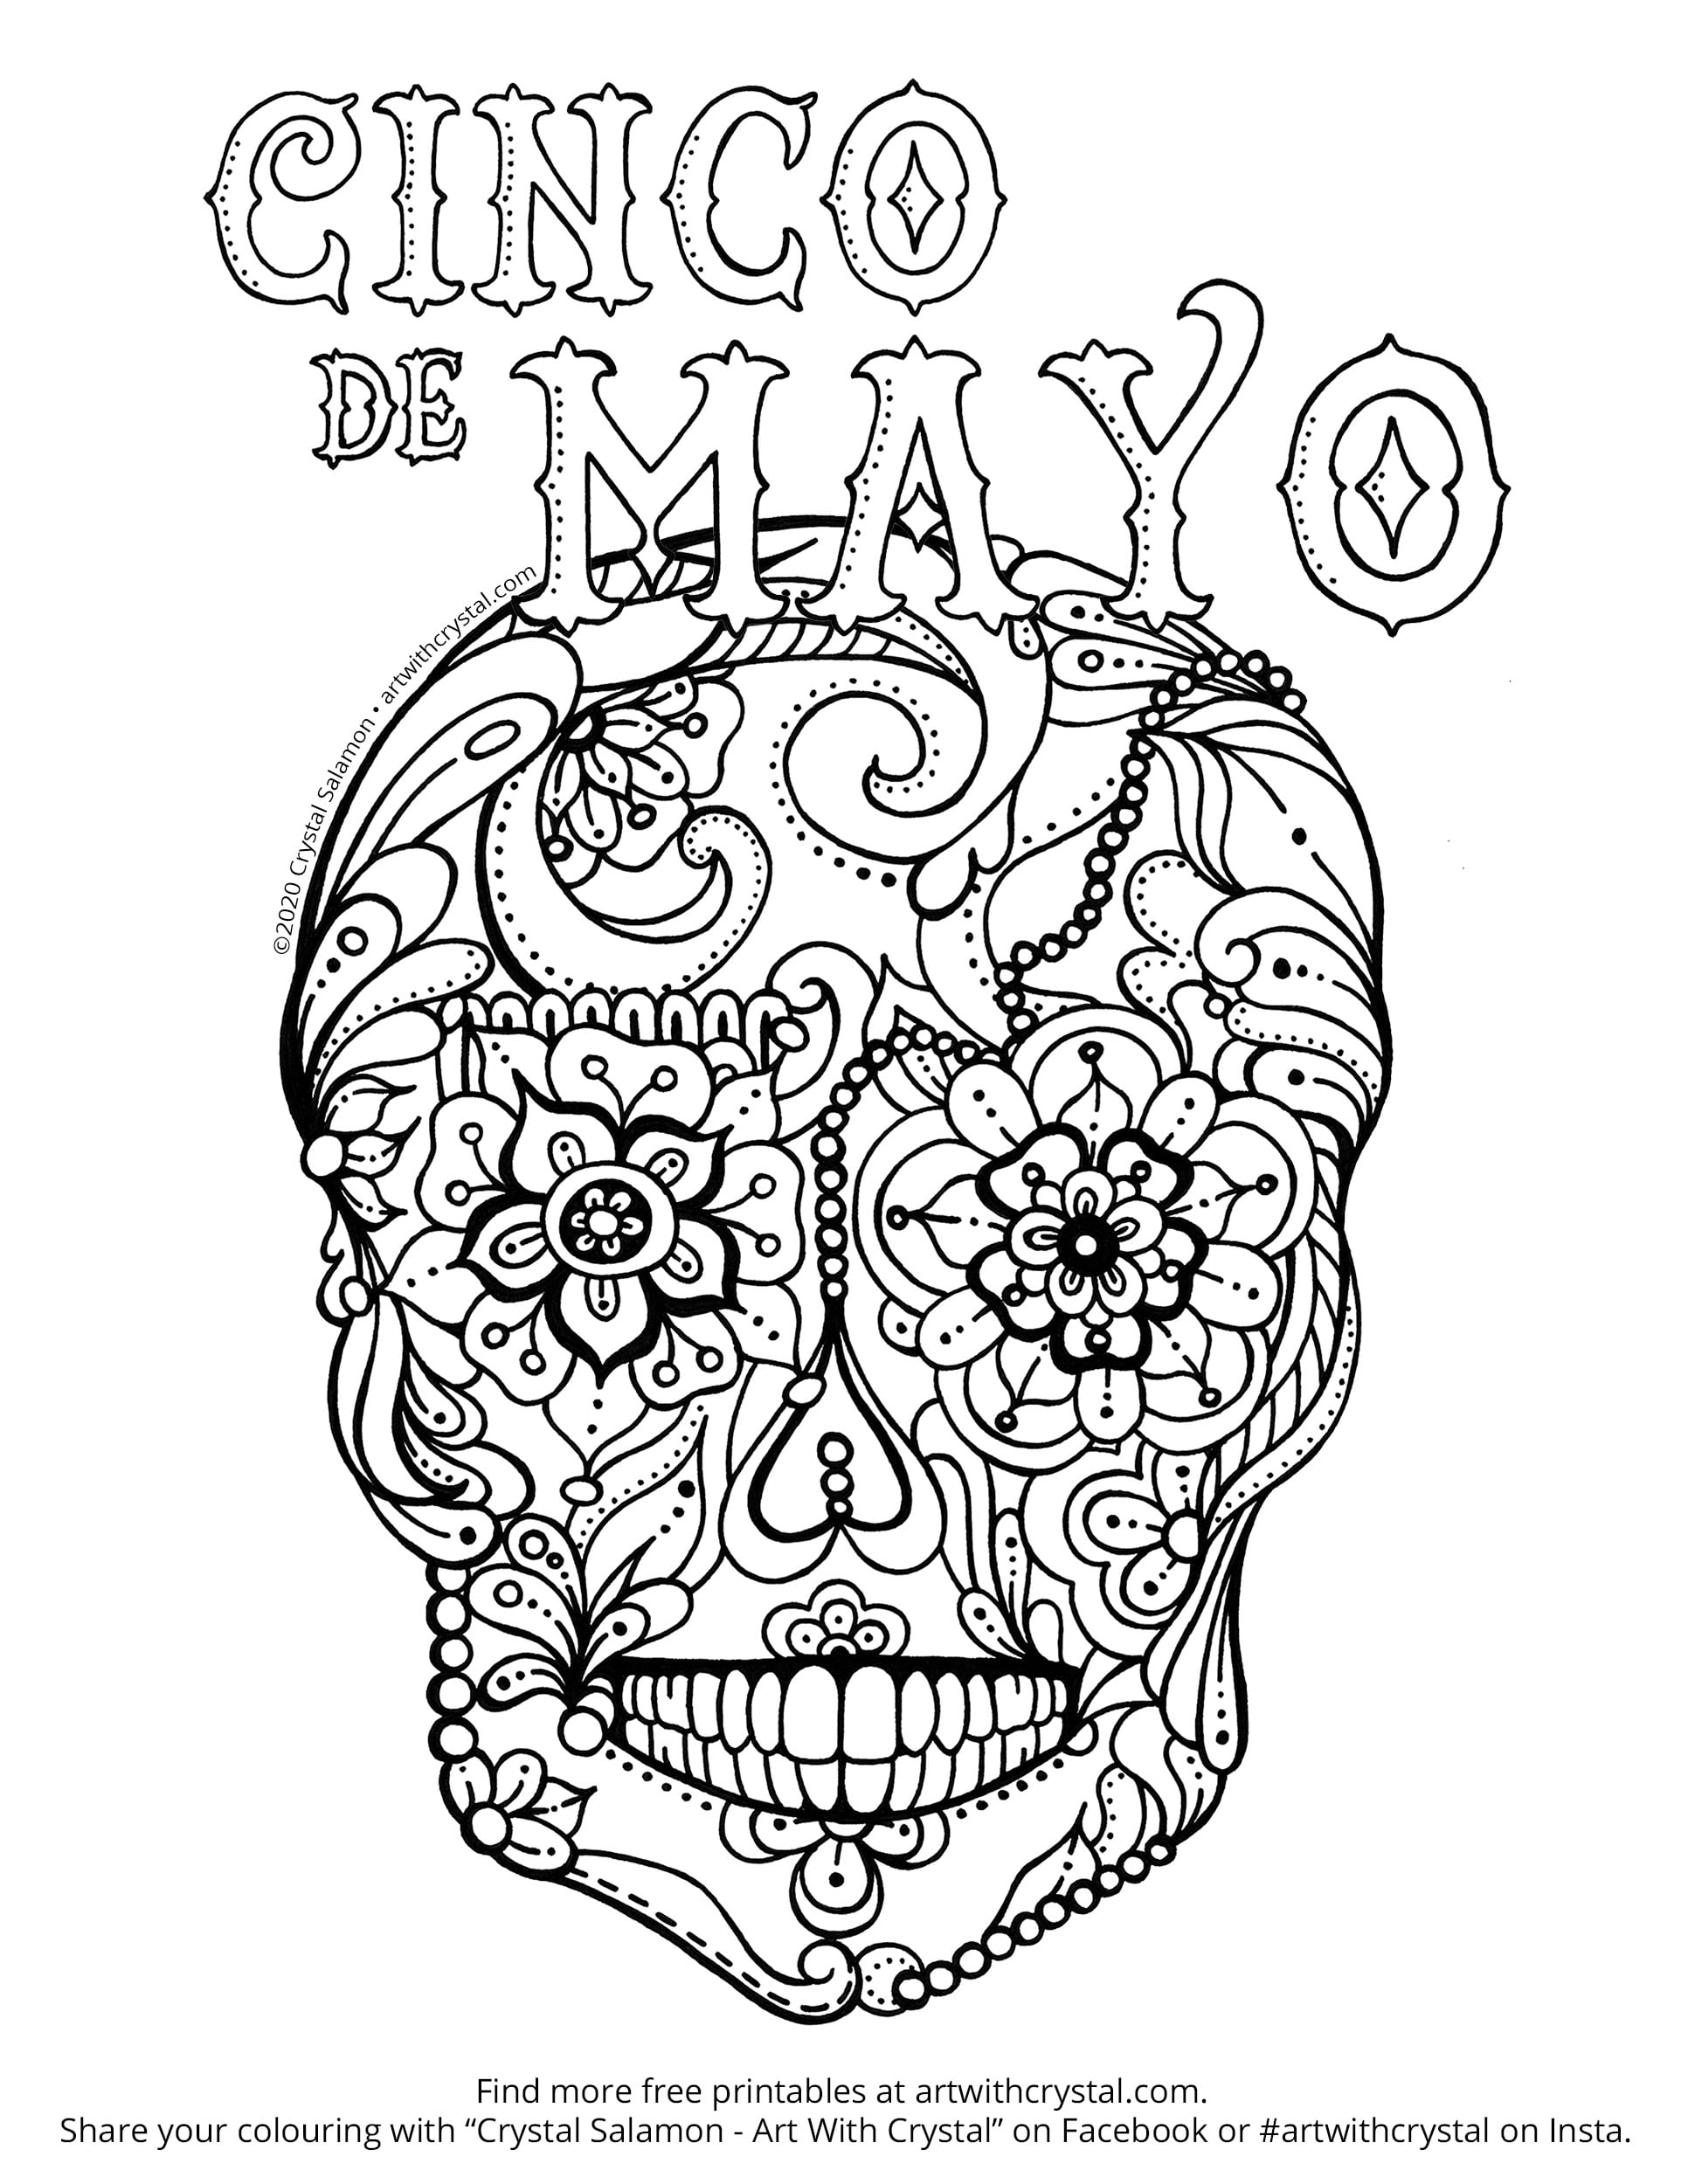 Cinco de mayo free printable colouring page art with crystal